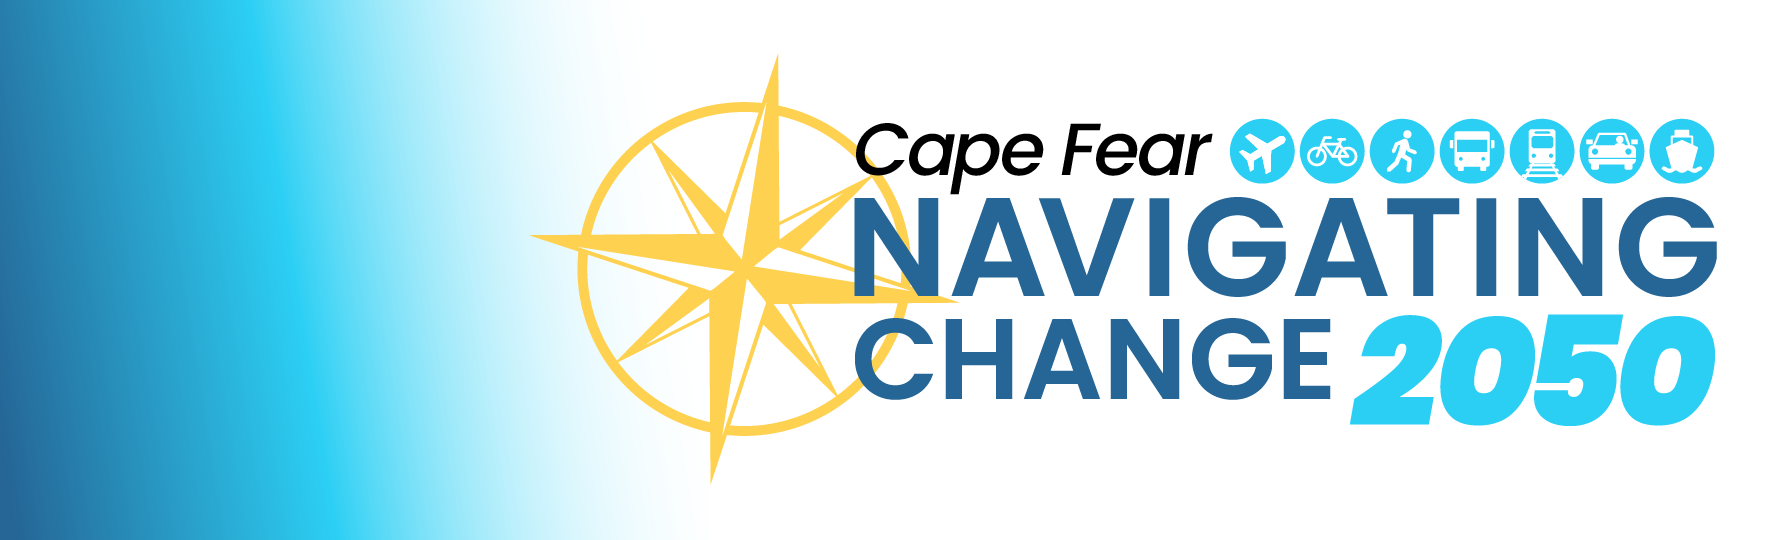 Cape Fear Navigating Change logo graphic